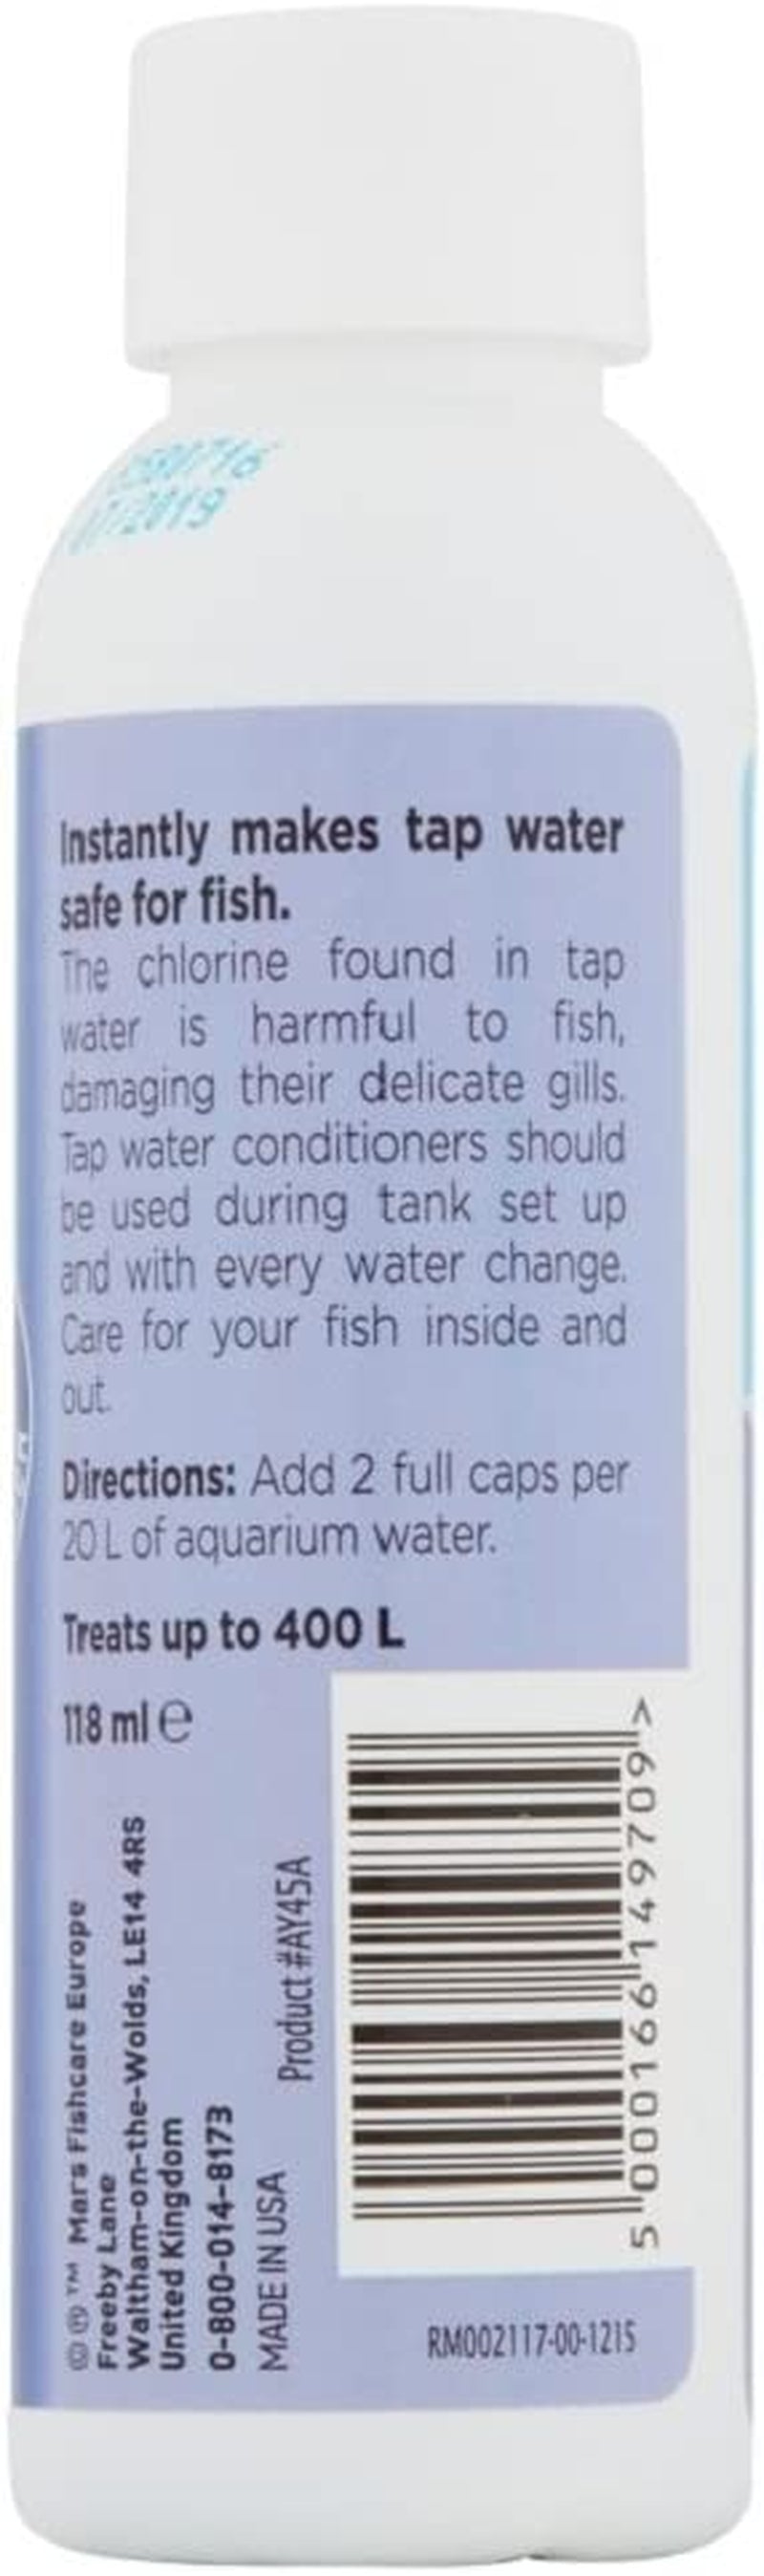 TAP WATER SAFE, Aquarium Water Conditioner, 118 Ml Bottle,White